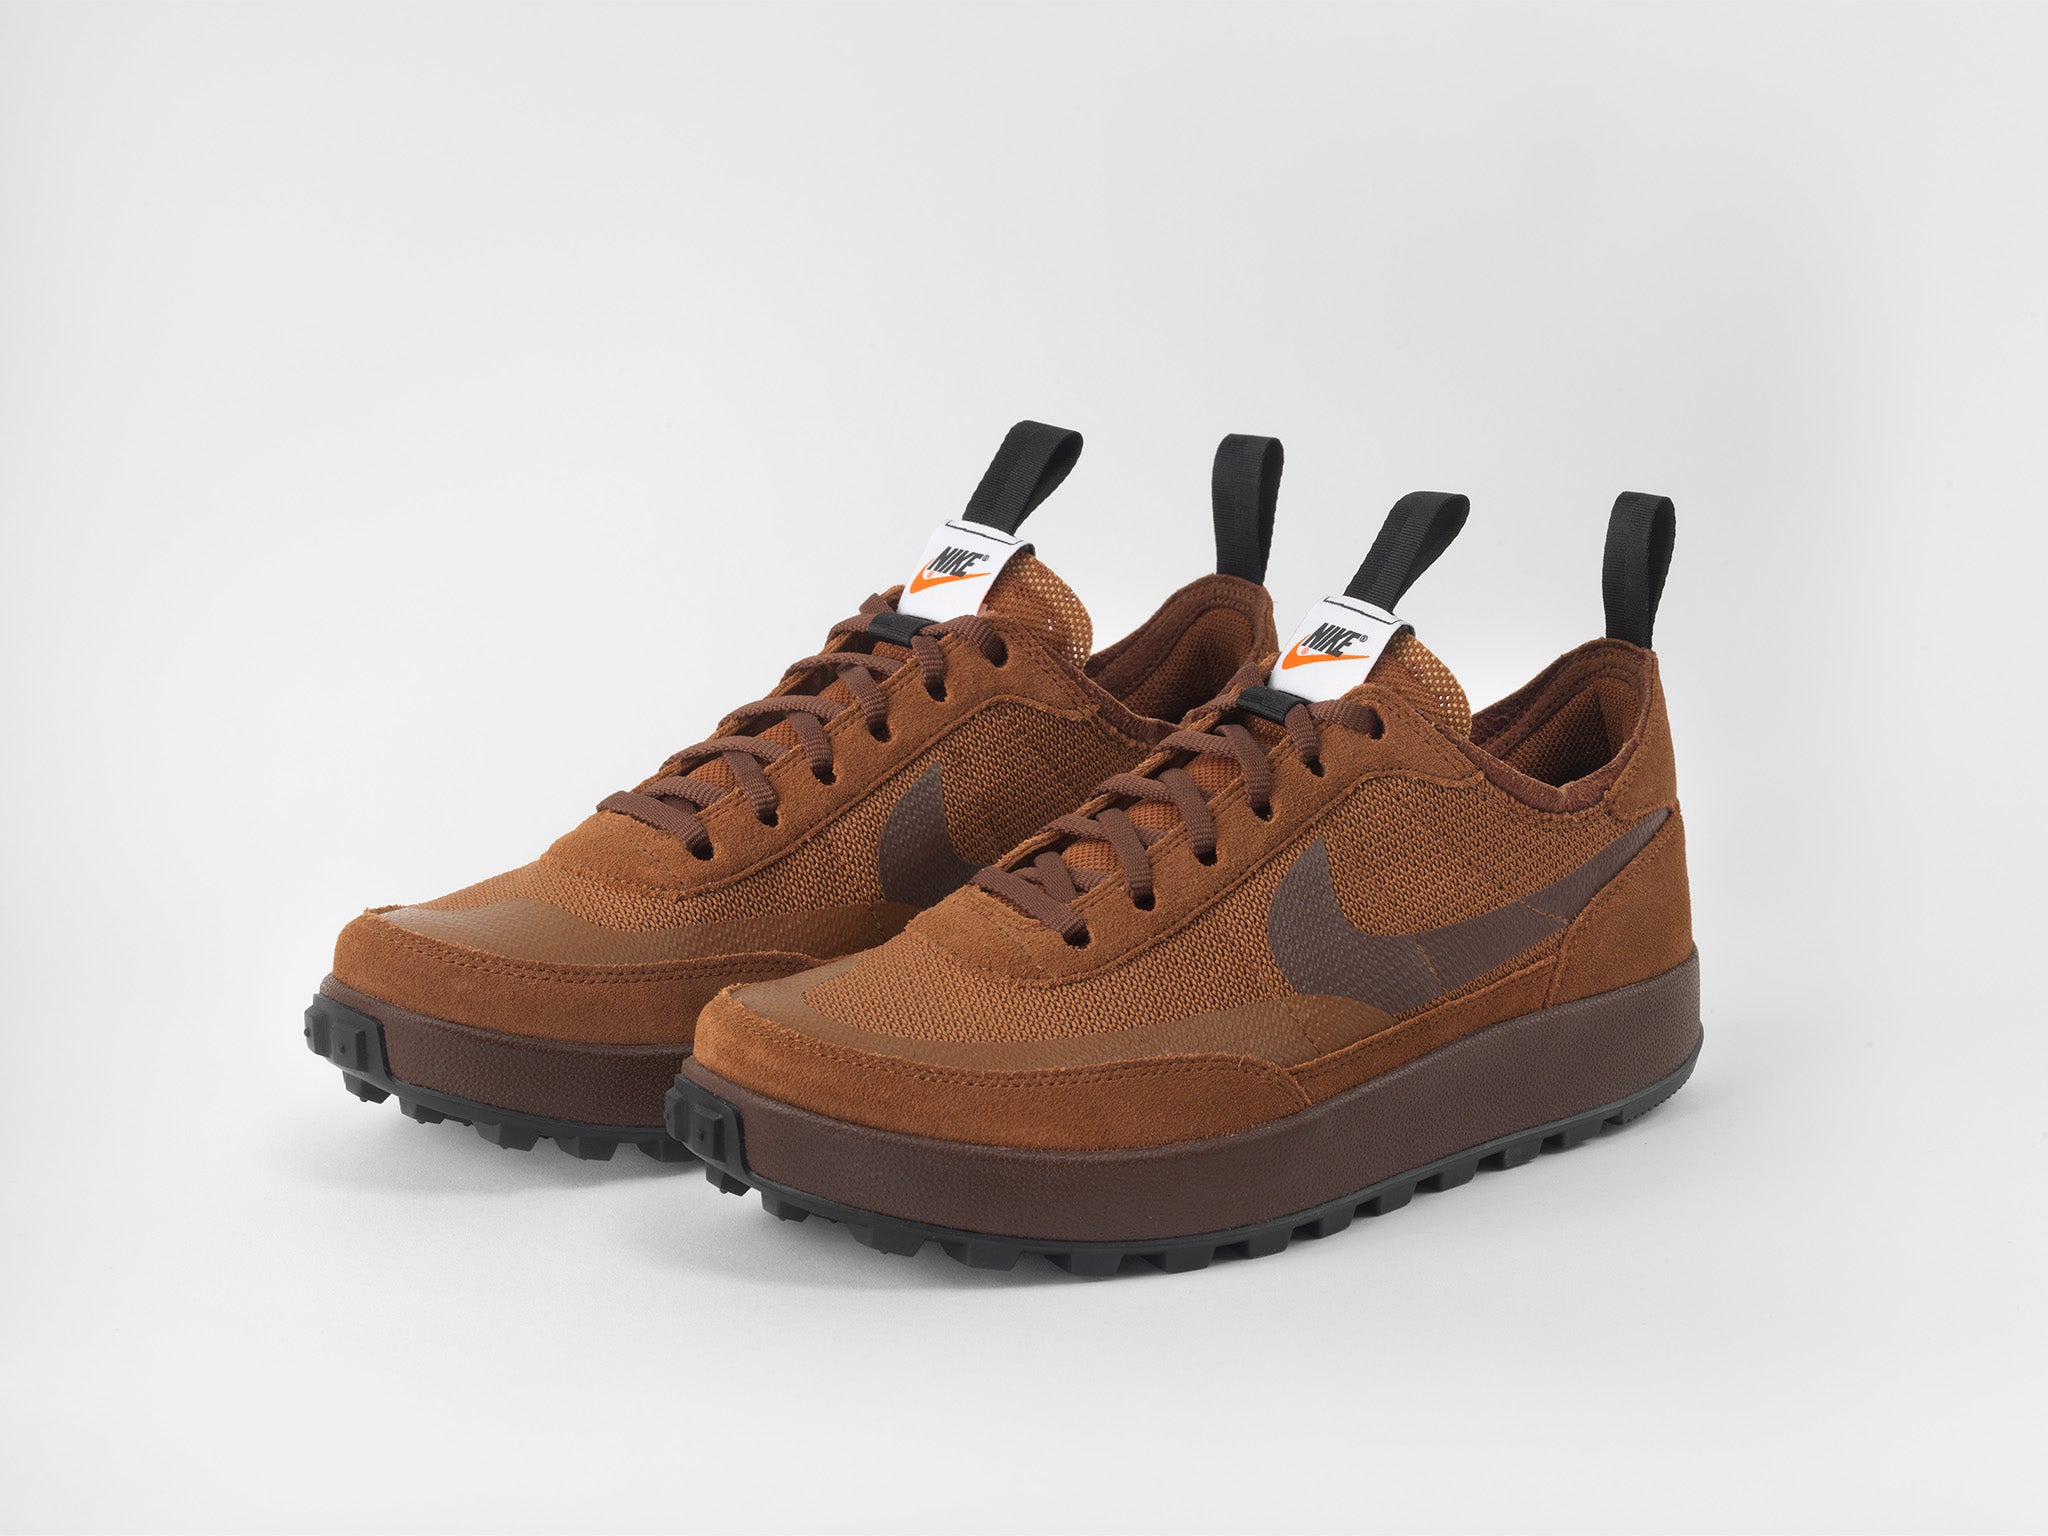 WMNS) Tom Sachs x NikeCraft General Purpose Shoe 'Brown' DA6672